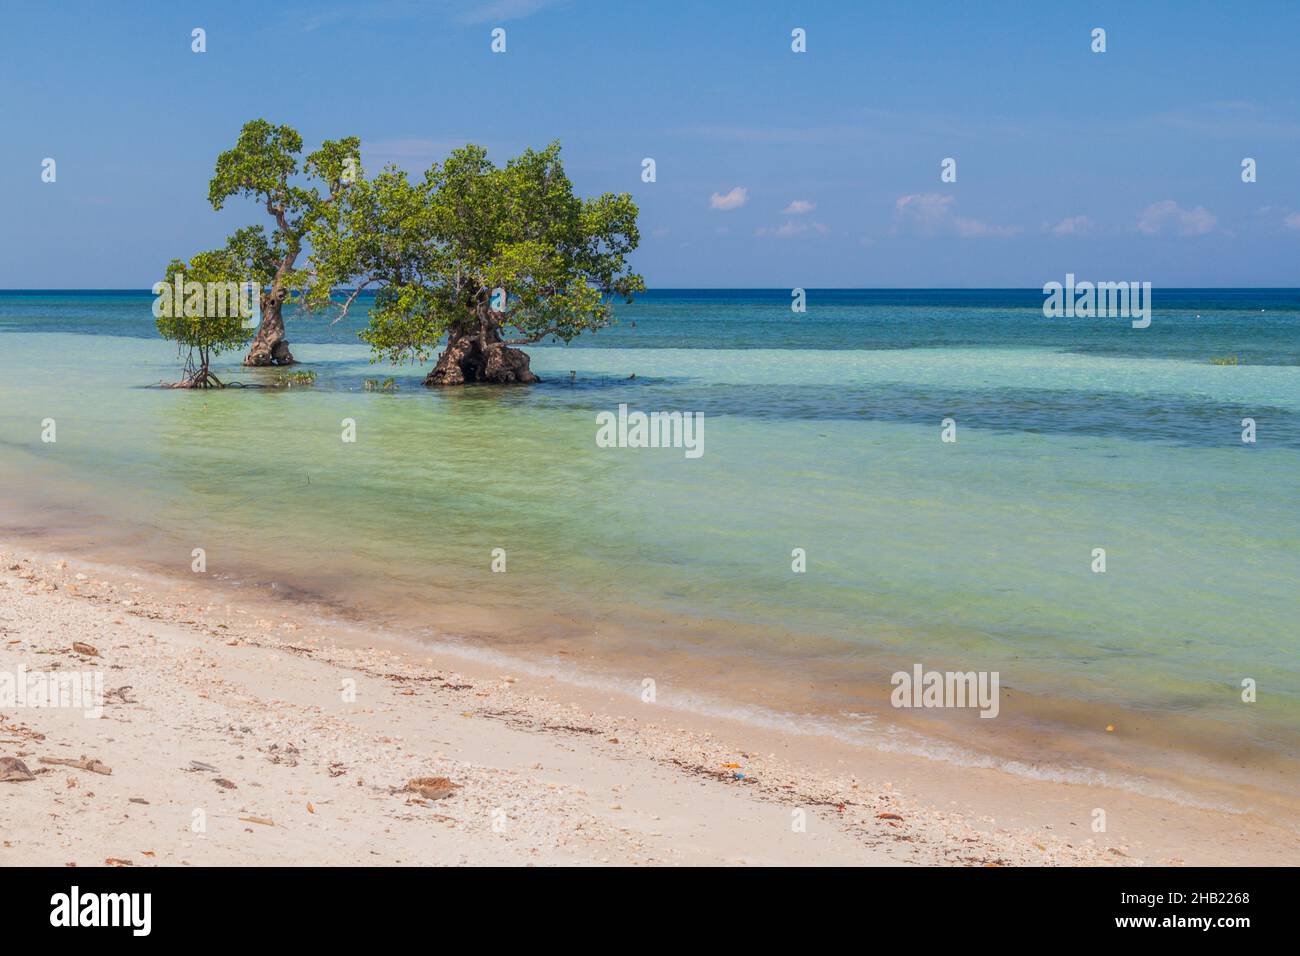 Mangrove trees on Siquijor island, Philippines. Stock Photo